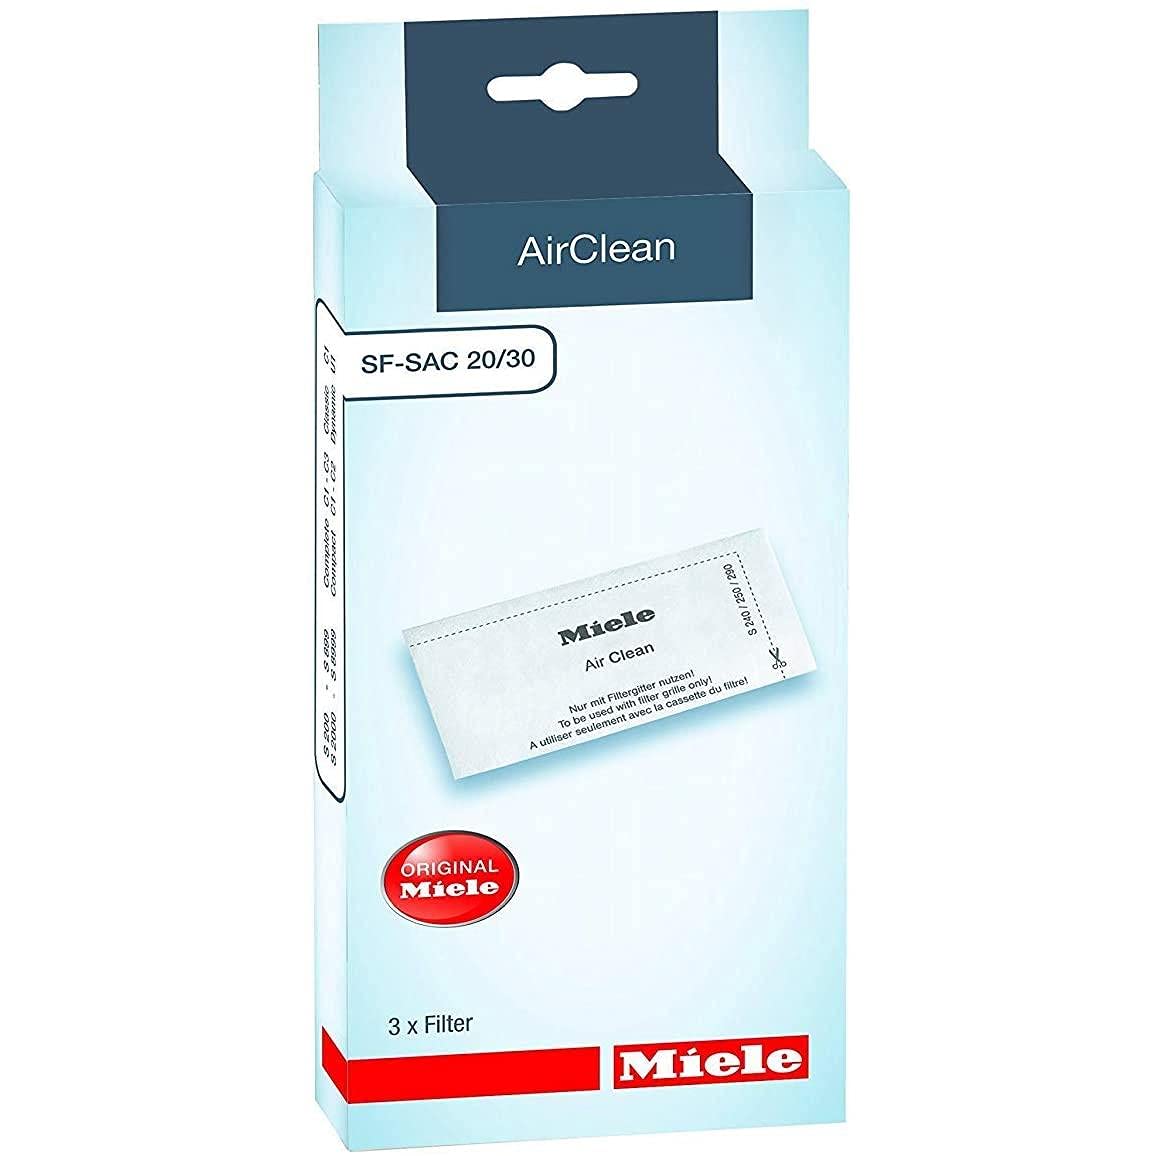 Miele Air Clean Filters 2 pack bundle (6 filters)  - Very Good